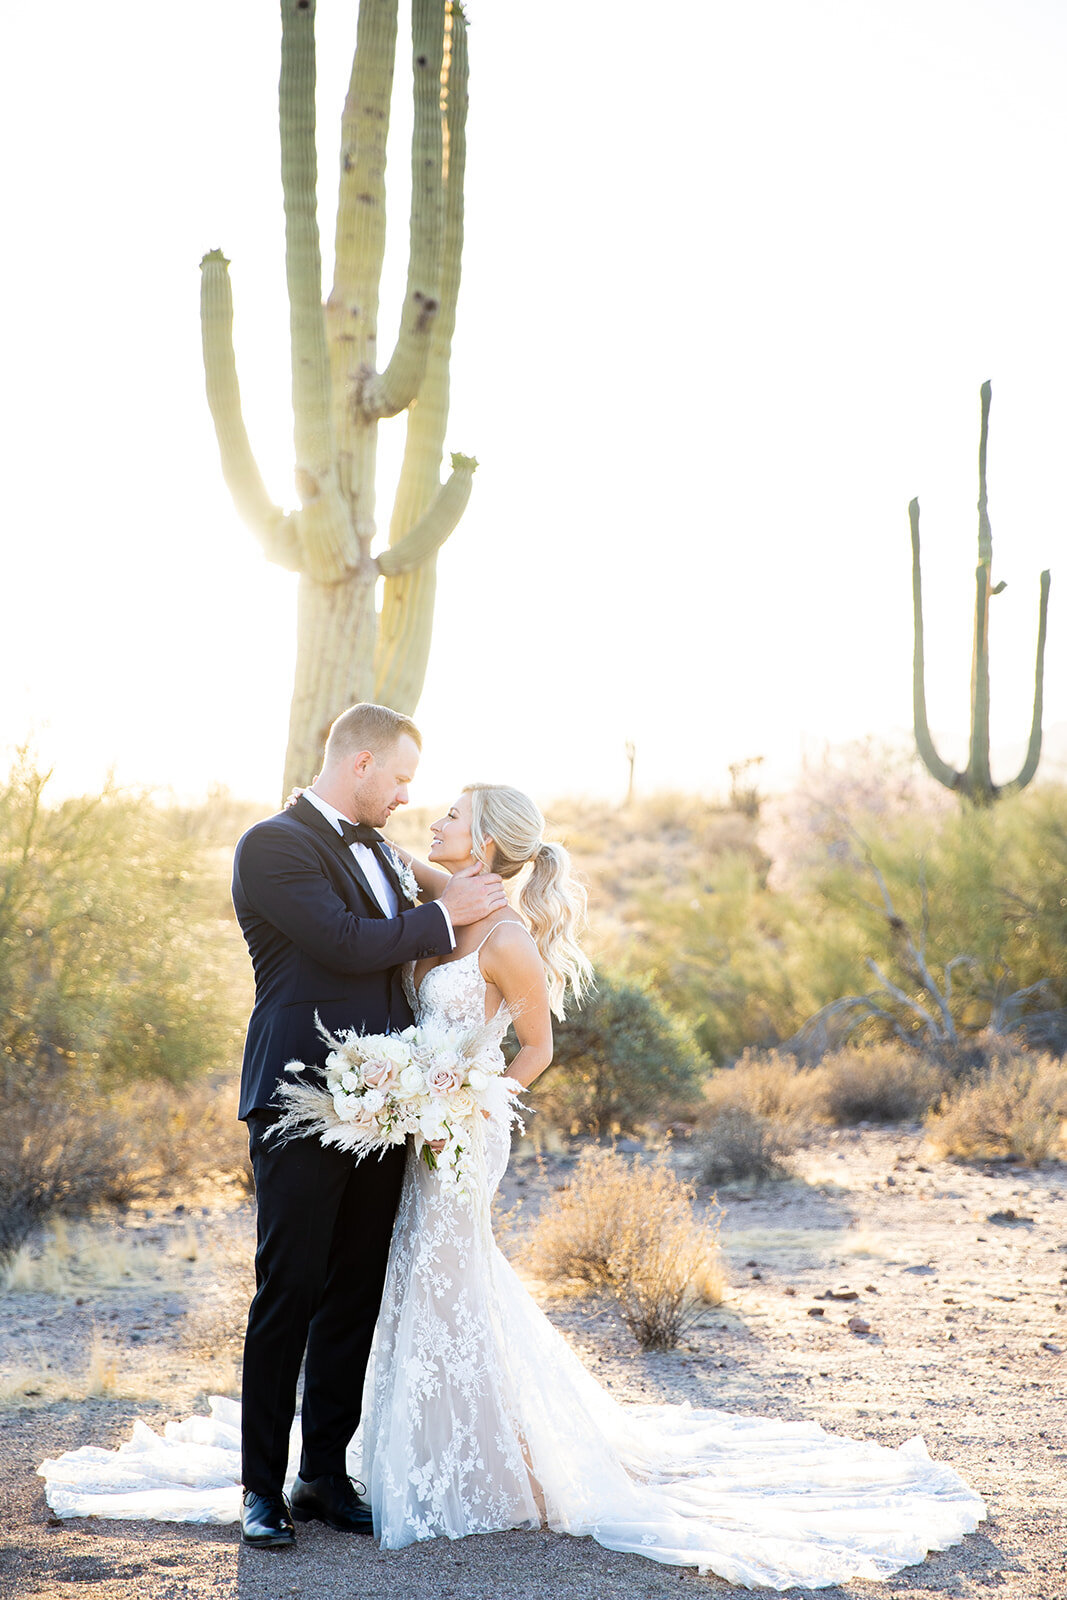 Karlie Colleen Photography - Ashley & Grant Wedding - The Paseo - Phoenix Arizona-750